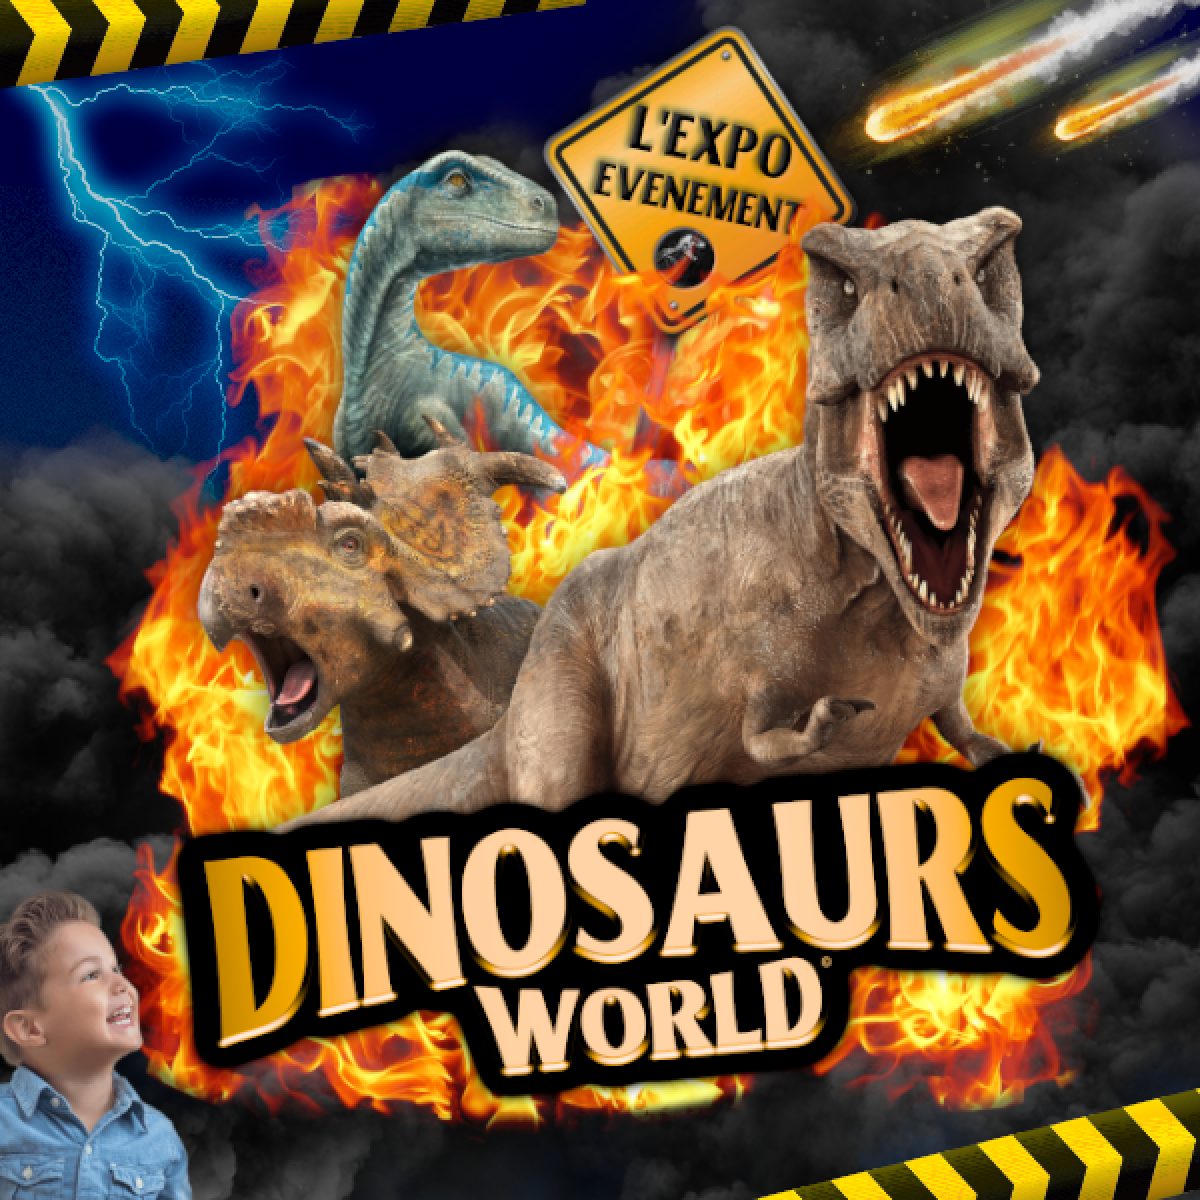 Exposition de dinosaures • Dinosaurs World à Avignon